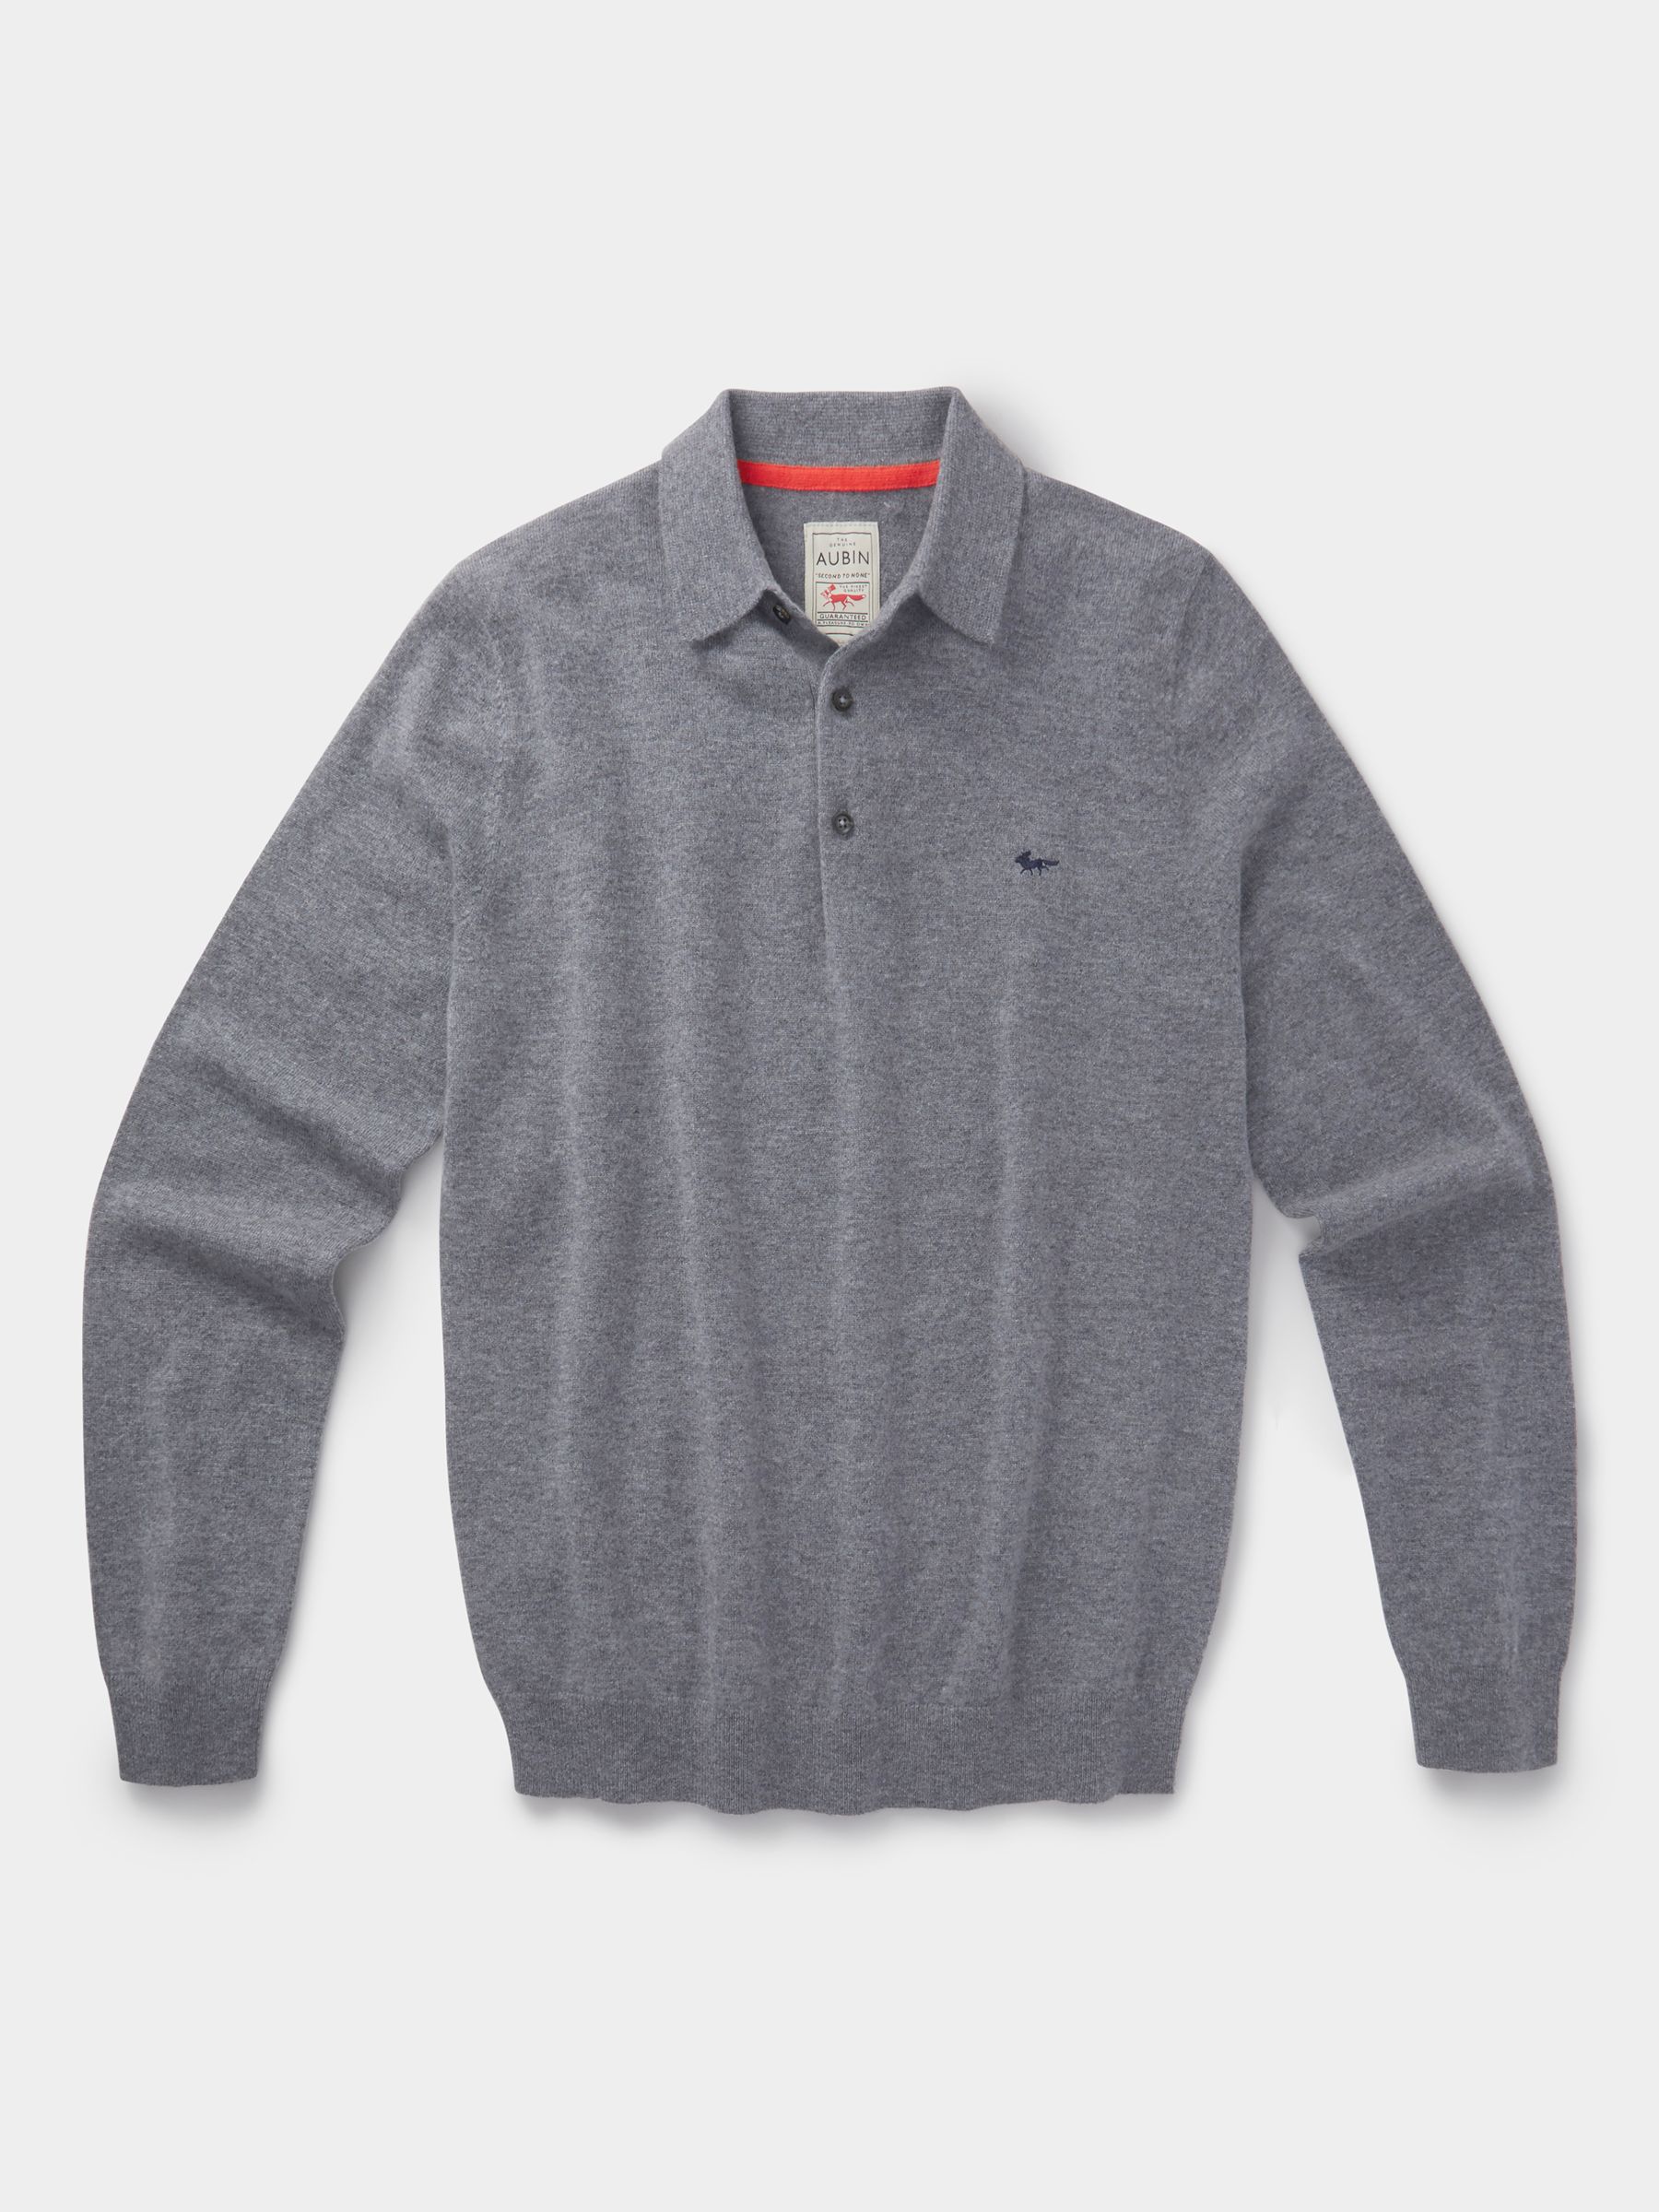 Aubin Brampton Merino Wool & Cashmere Polo Shirt, Charcoal, S